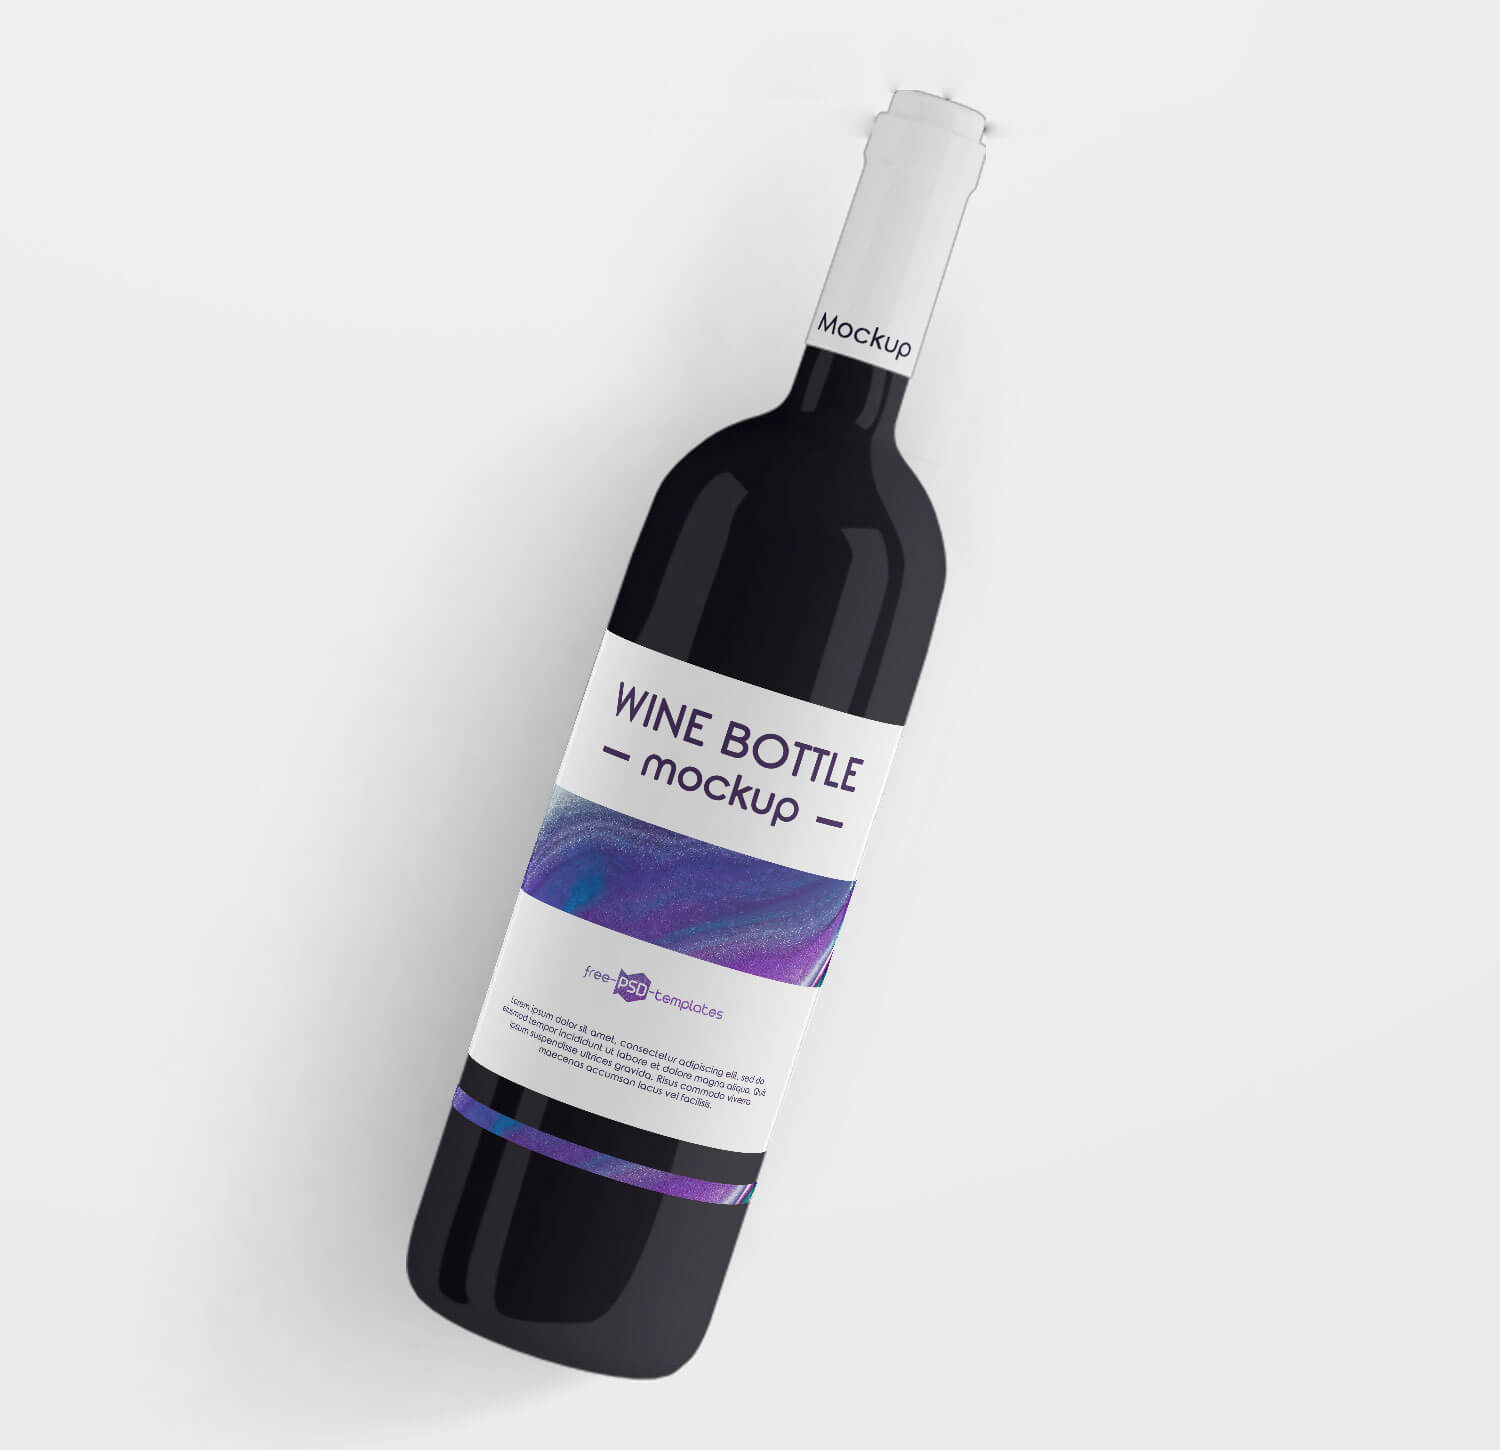 Four Mockups of Modern Wine Bottle Packaging2